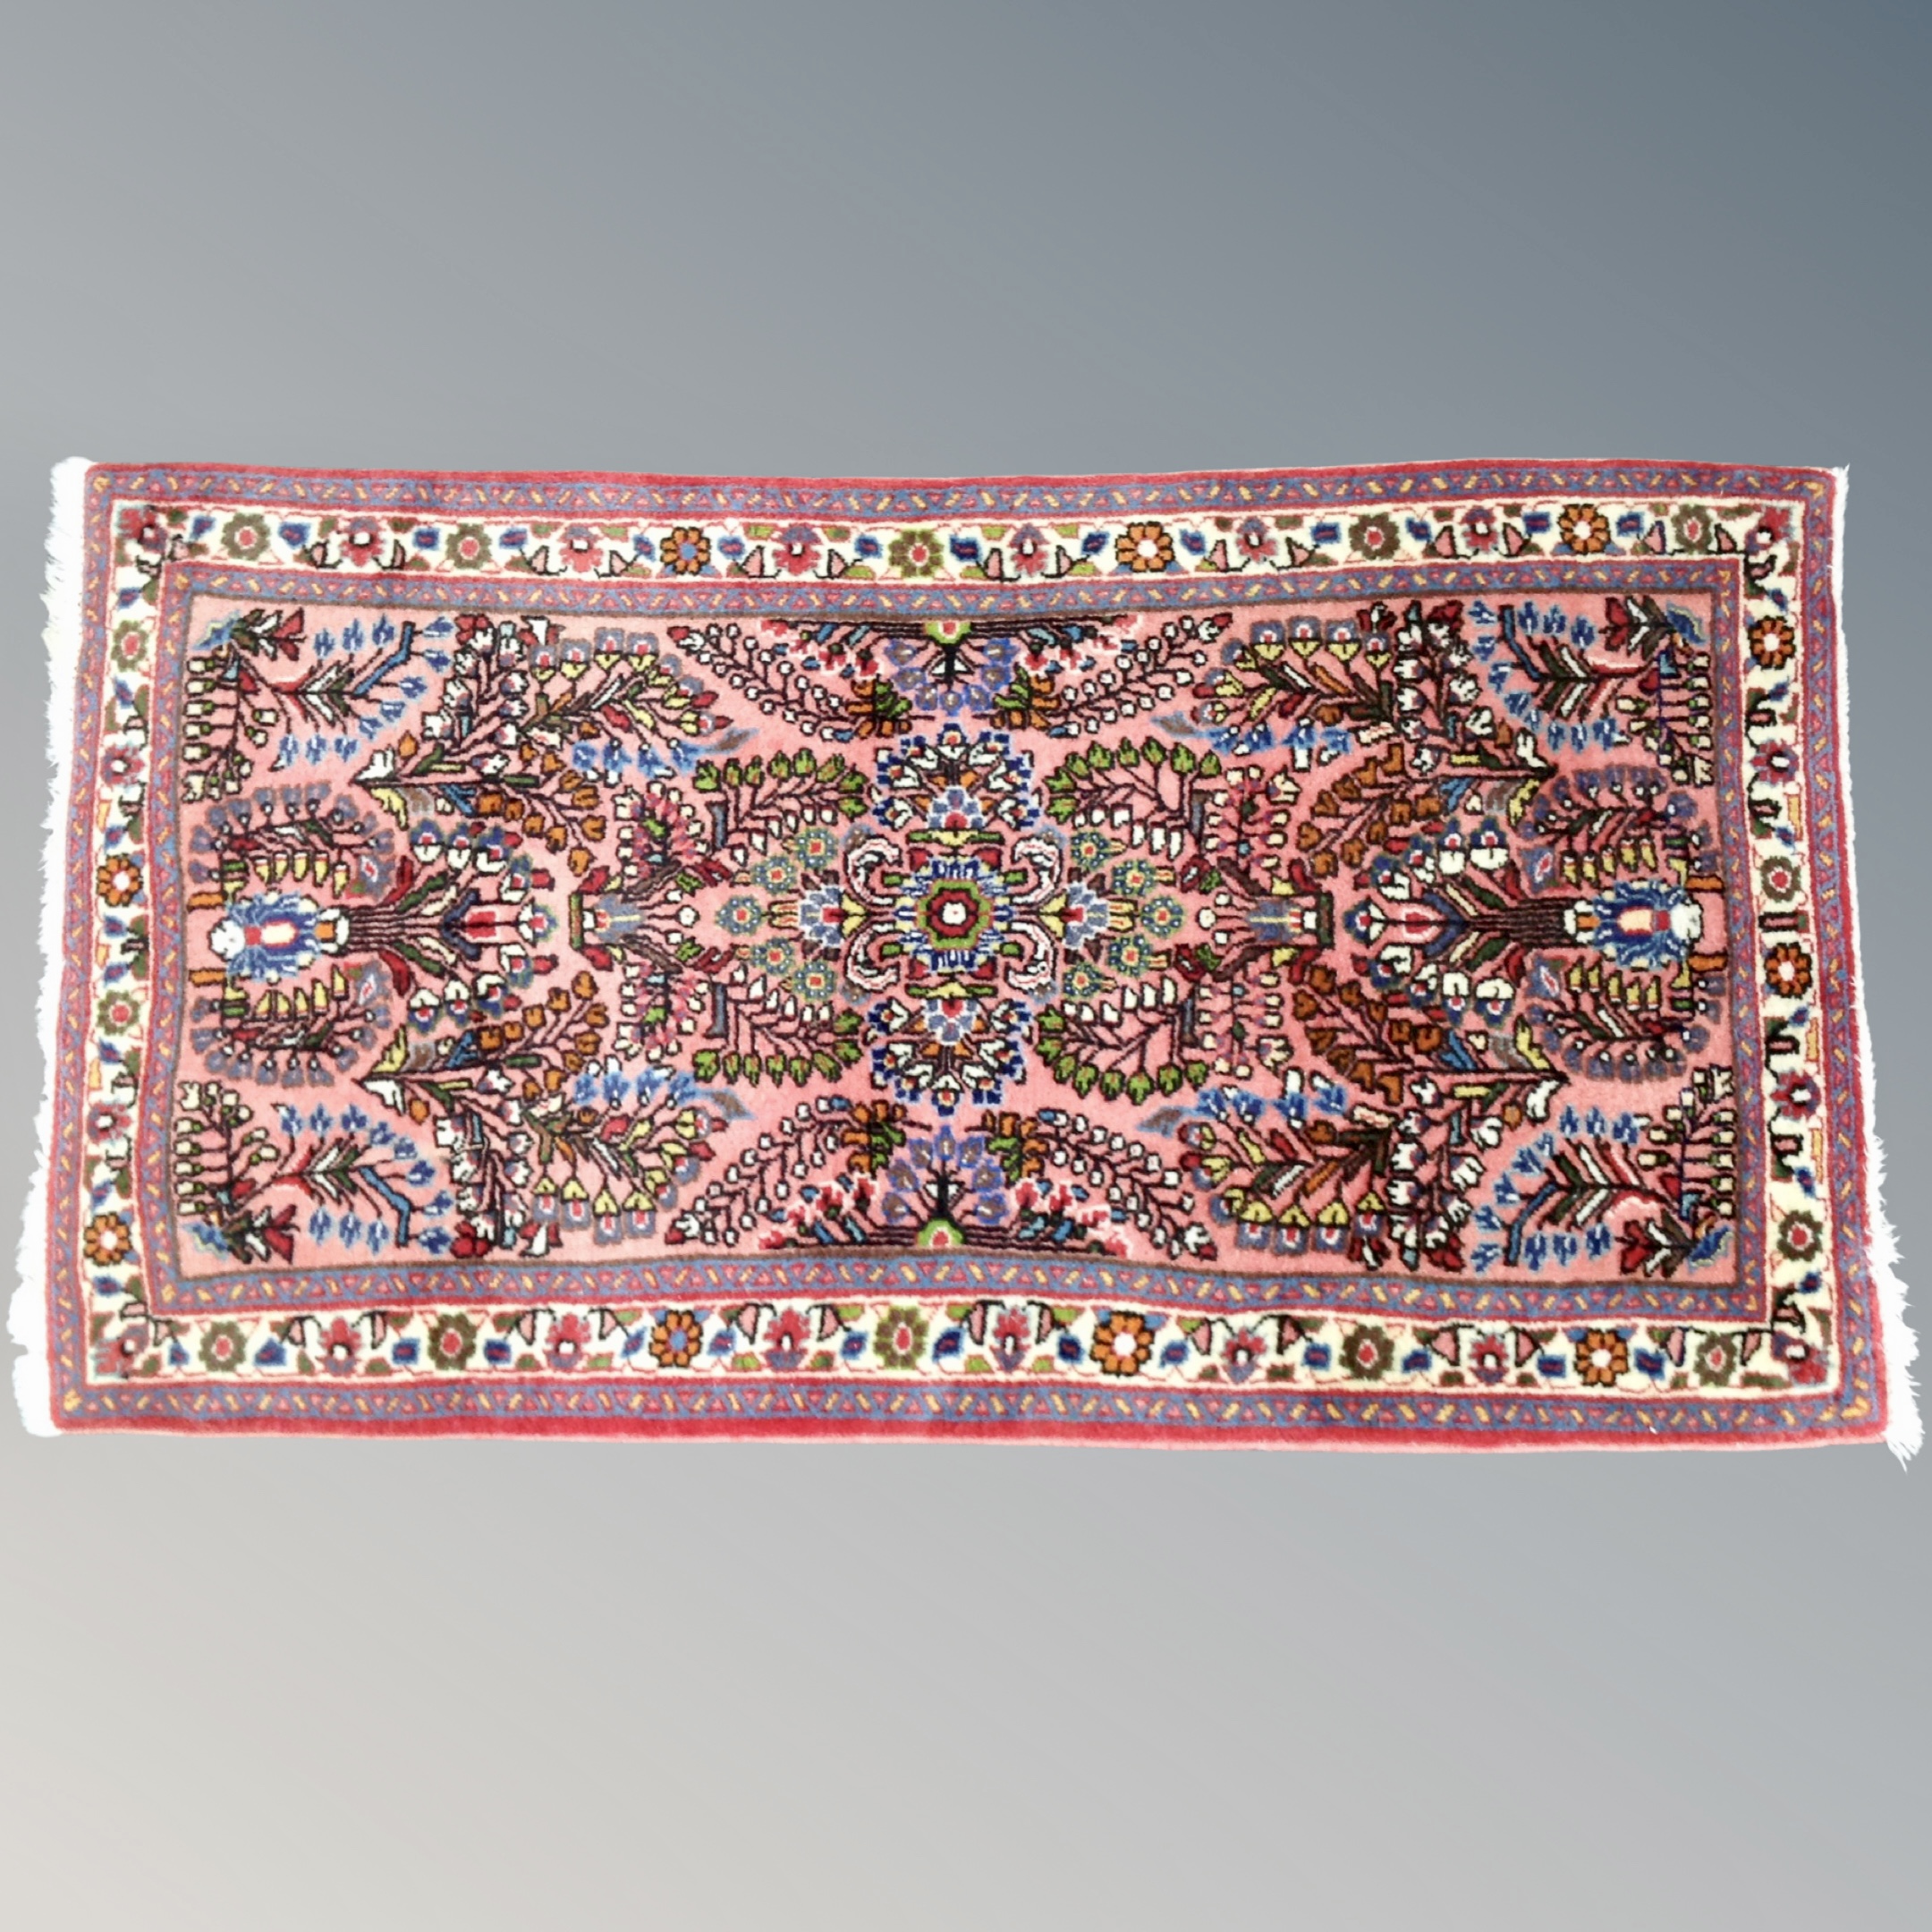 A Saroukh rug, West Iran,